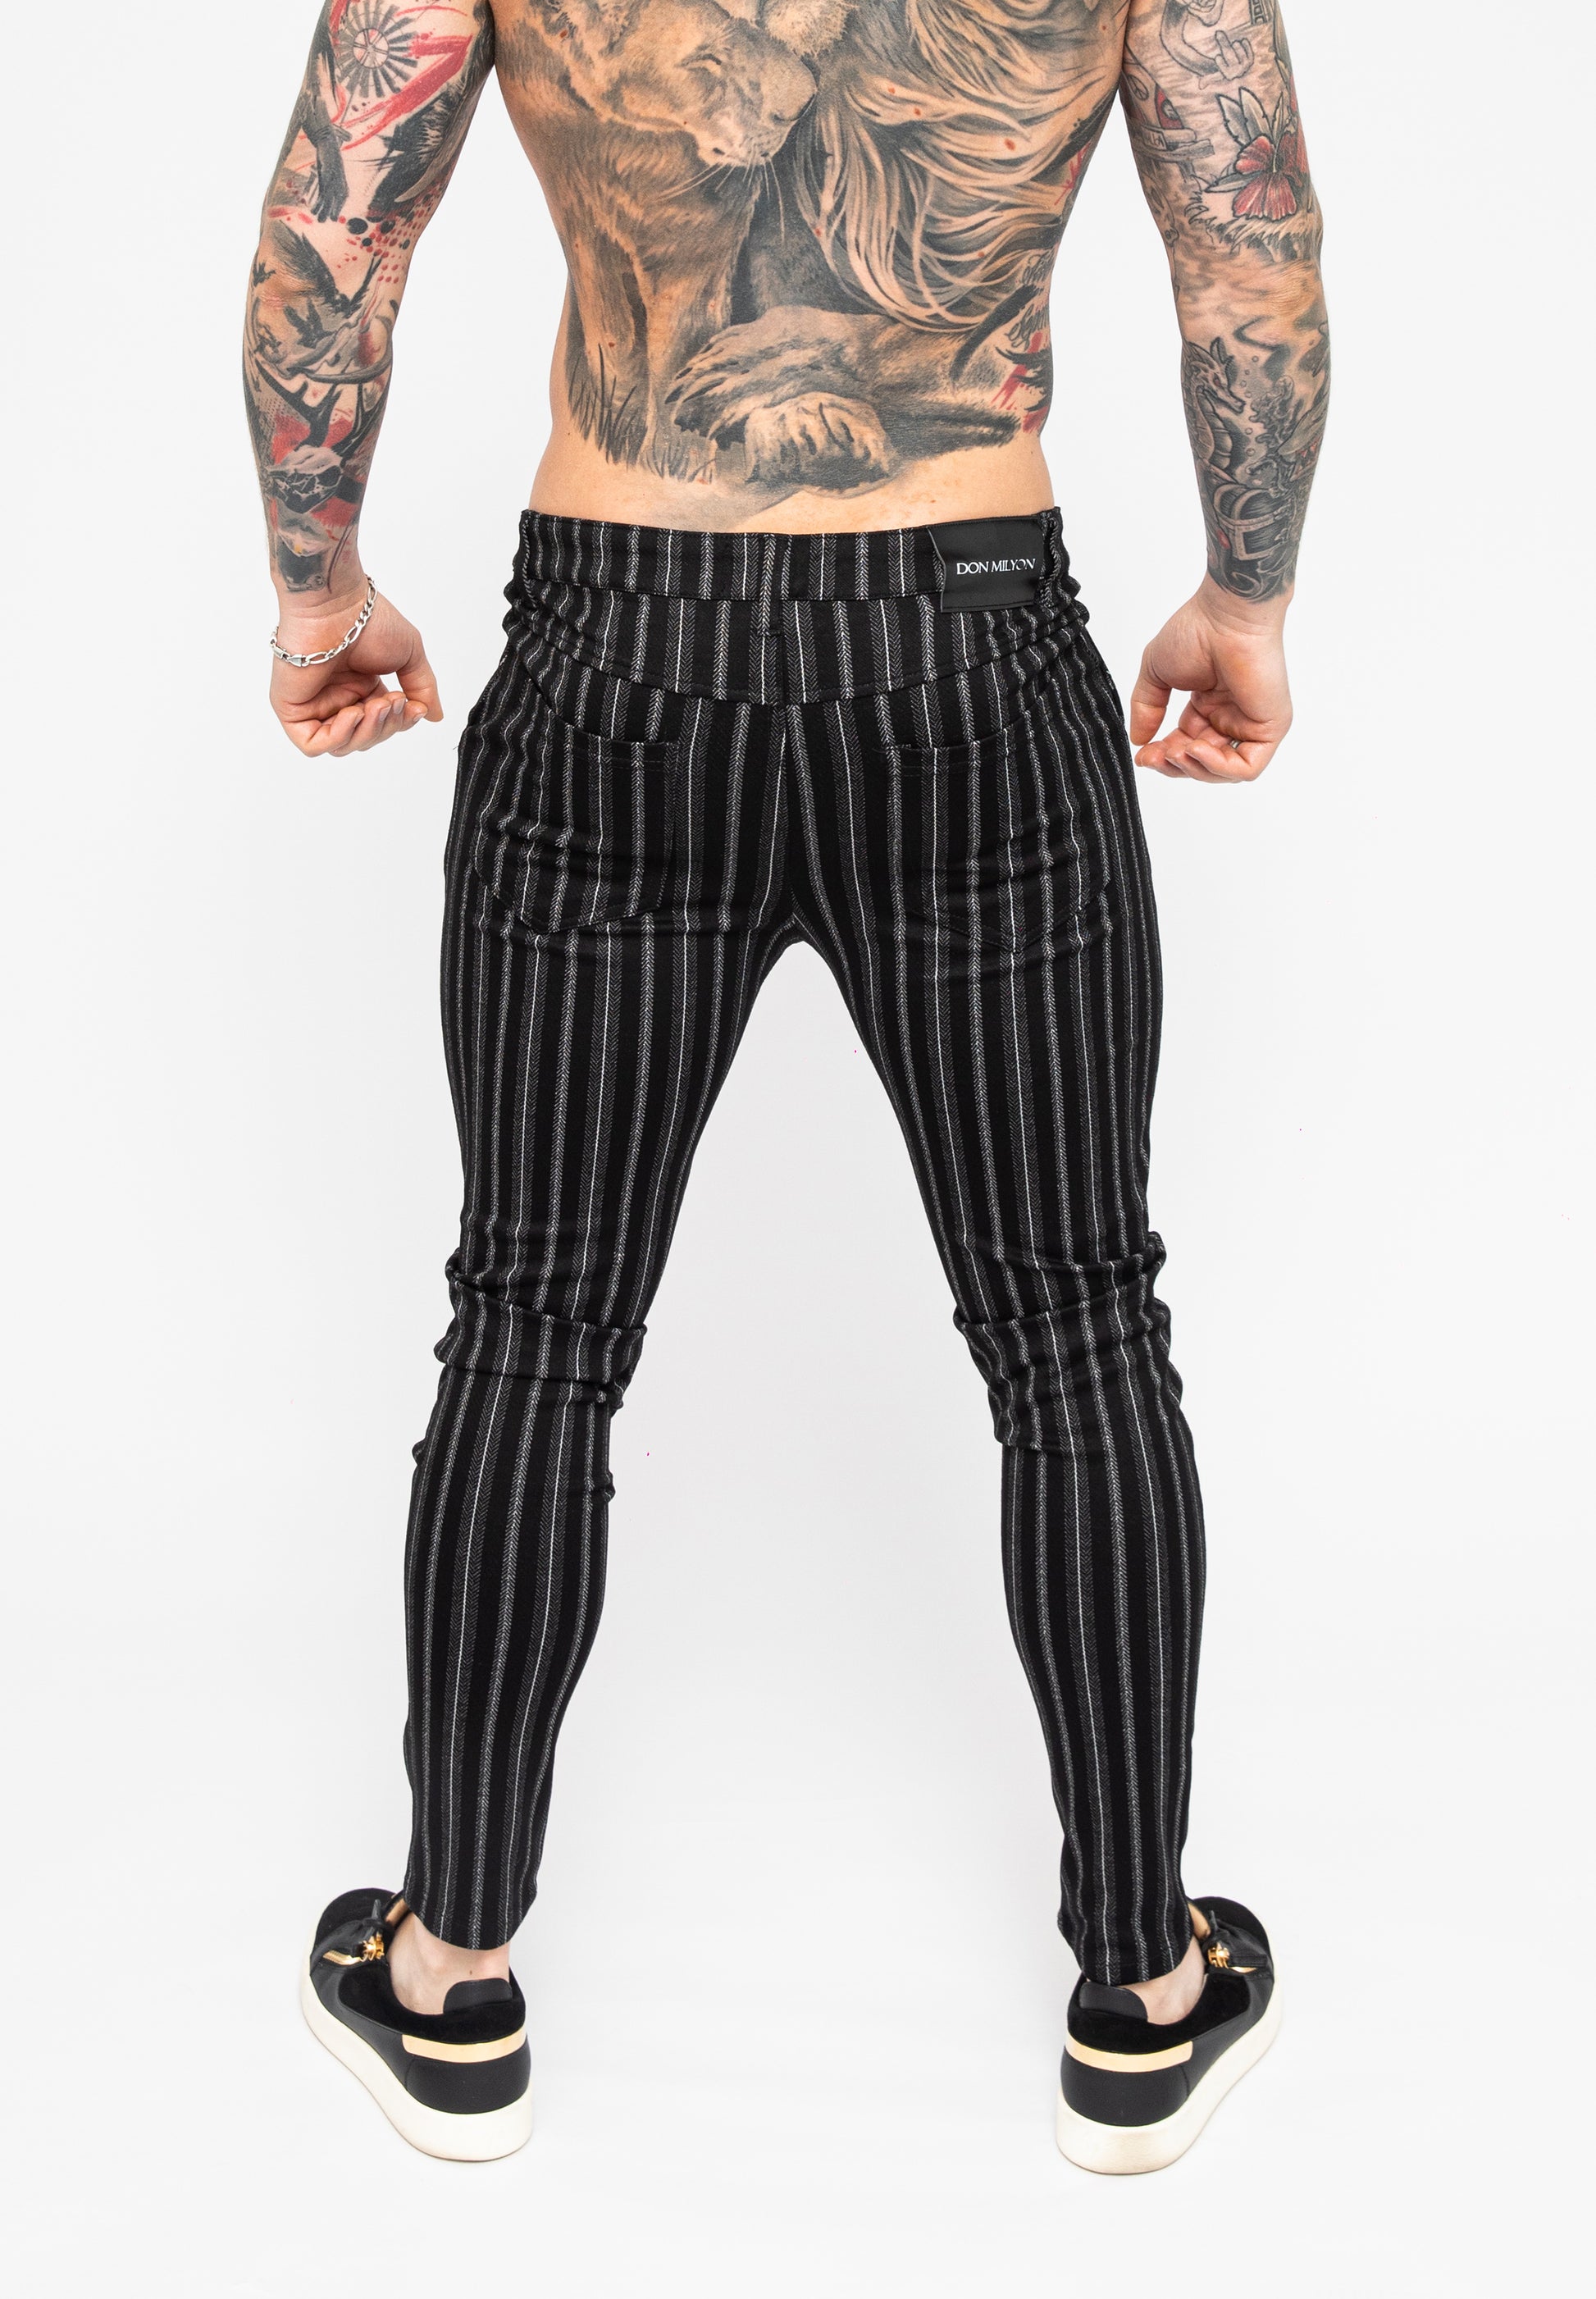 Men's Black Striped Skinny Fit Stretch Chino Pants Rear